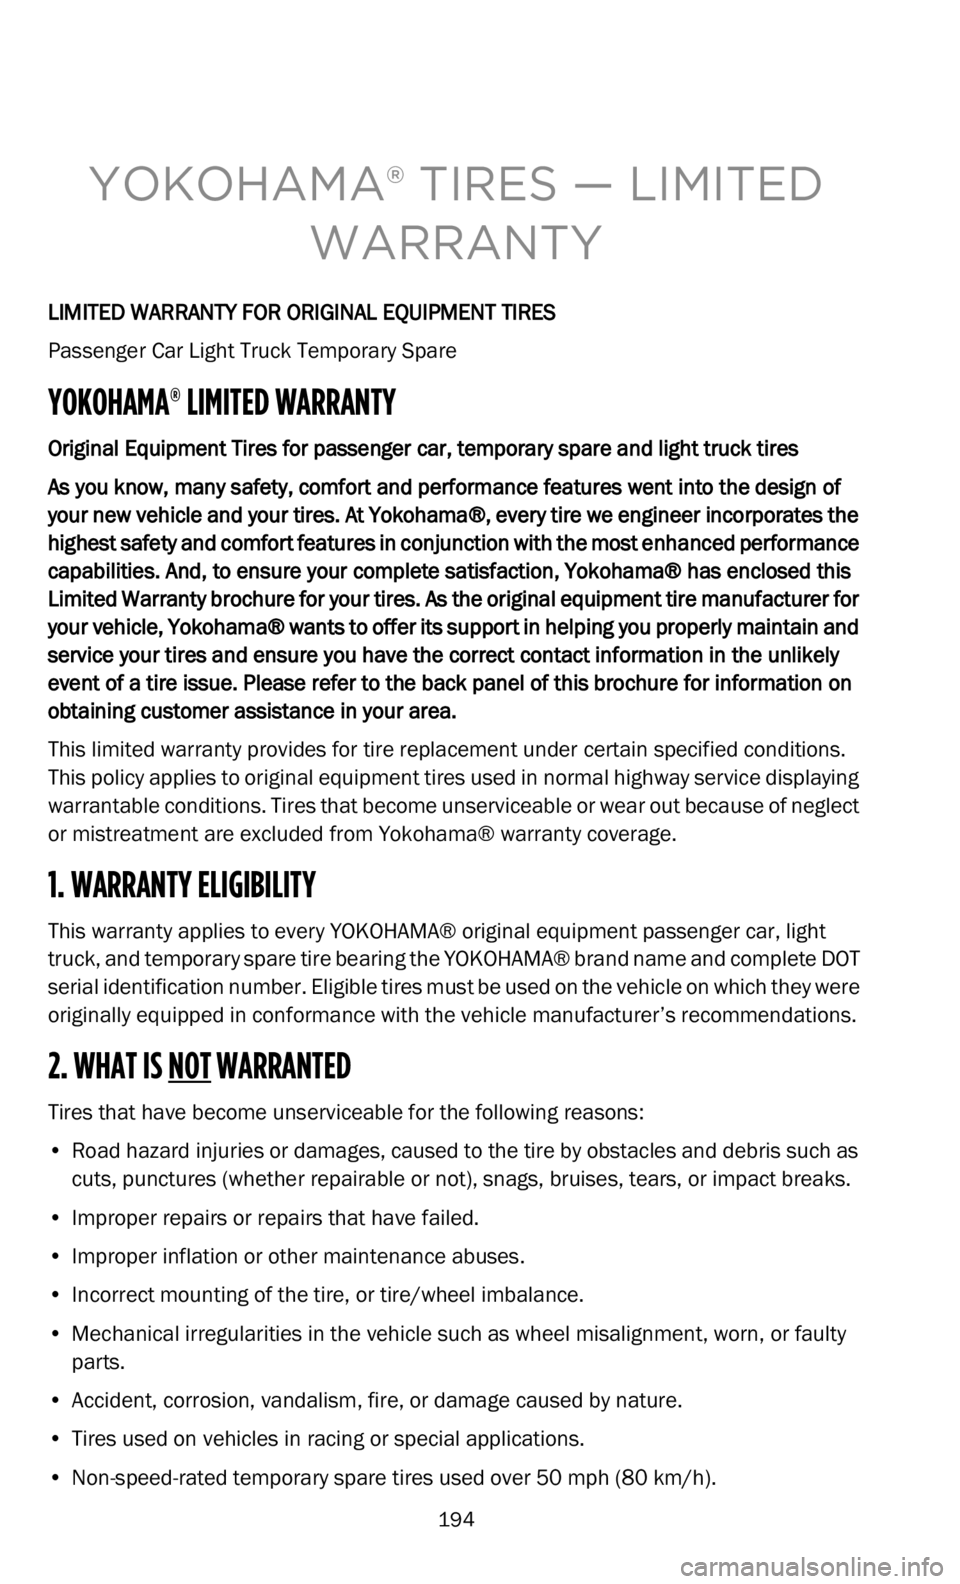 DODGE CHARGER 2022  Vehicle Warranty 
194
YOKOHAMA® TIRES — LIMITED WARRANTY
LIMITED WARRANTY FOR ORIGINAL EQUIPMENT TIRES
Passenger Car Light Truck Temporary Spare
YOKOHAMA® LIMITED WARRANTY
Original Equipment Tires for passenger ca